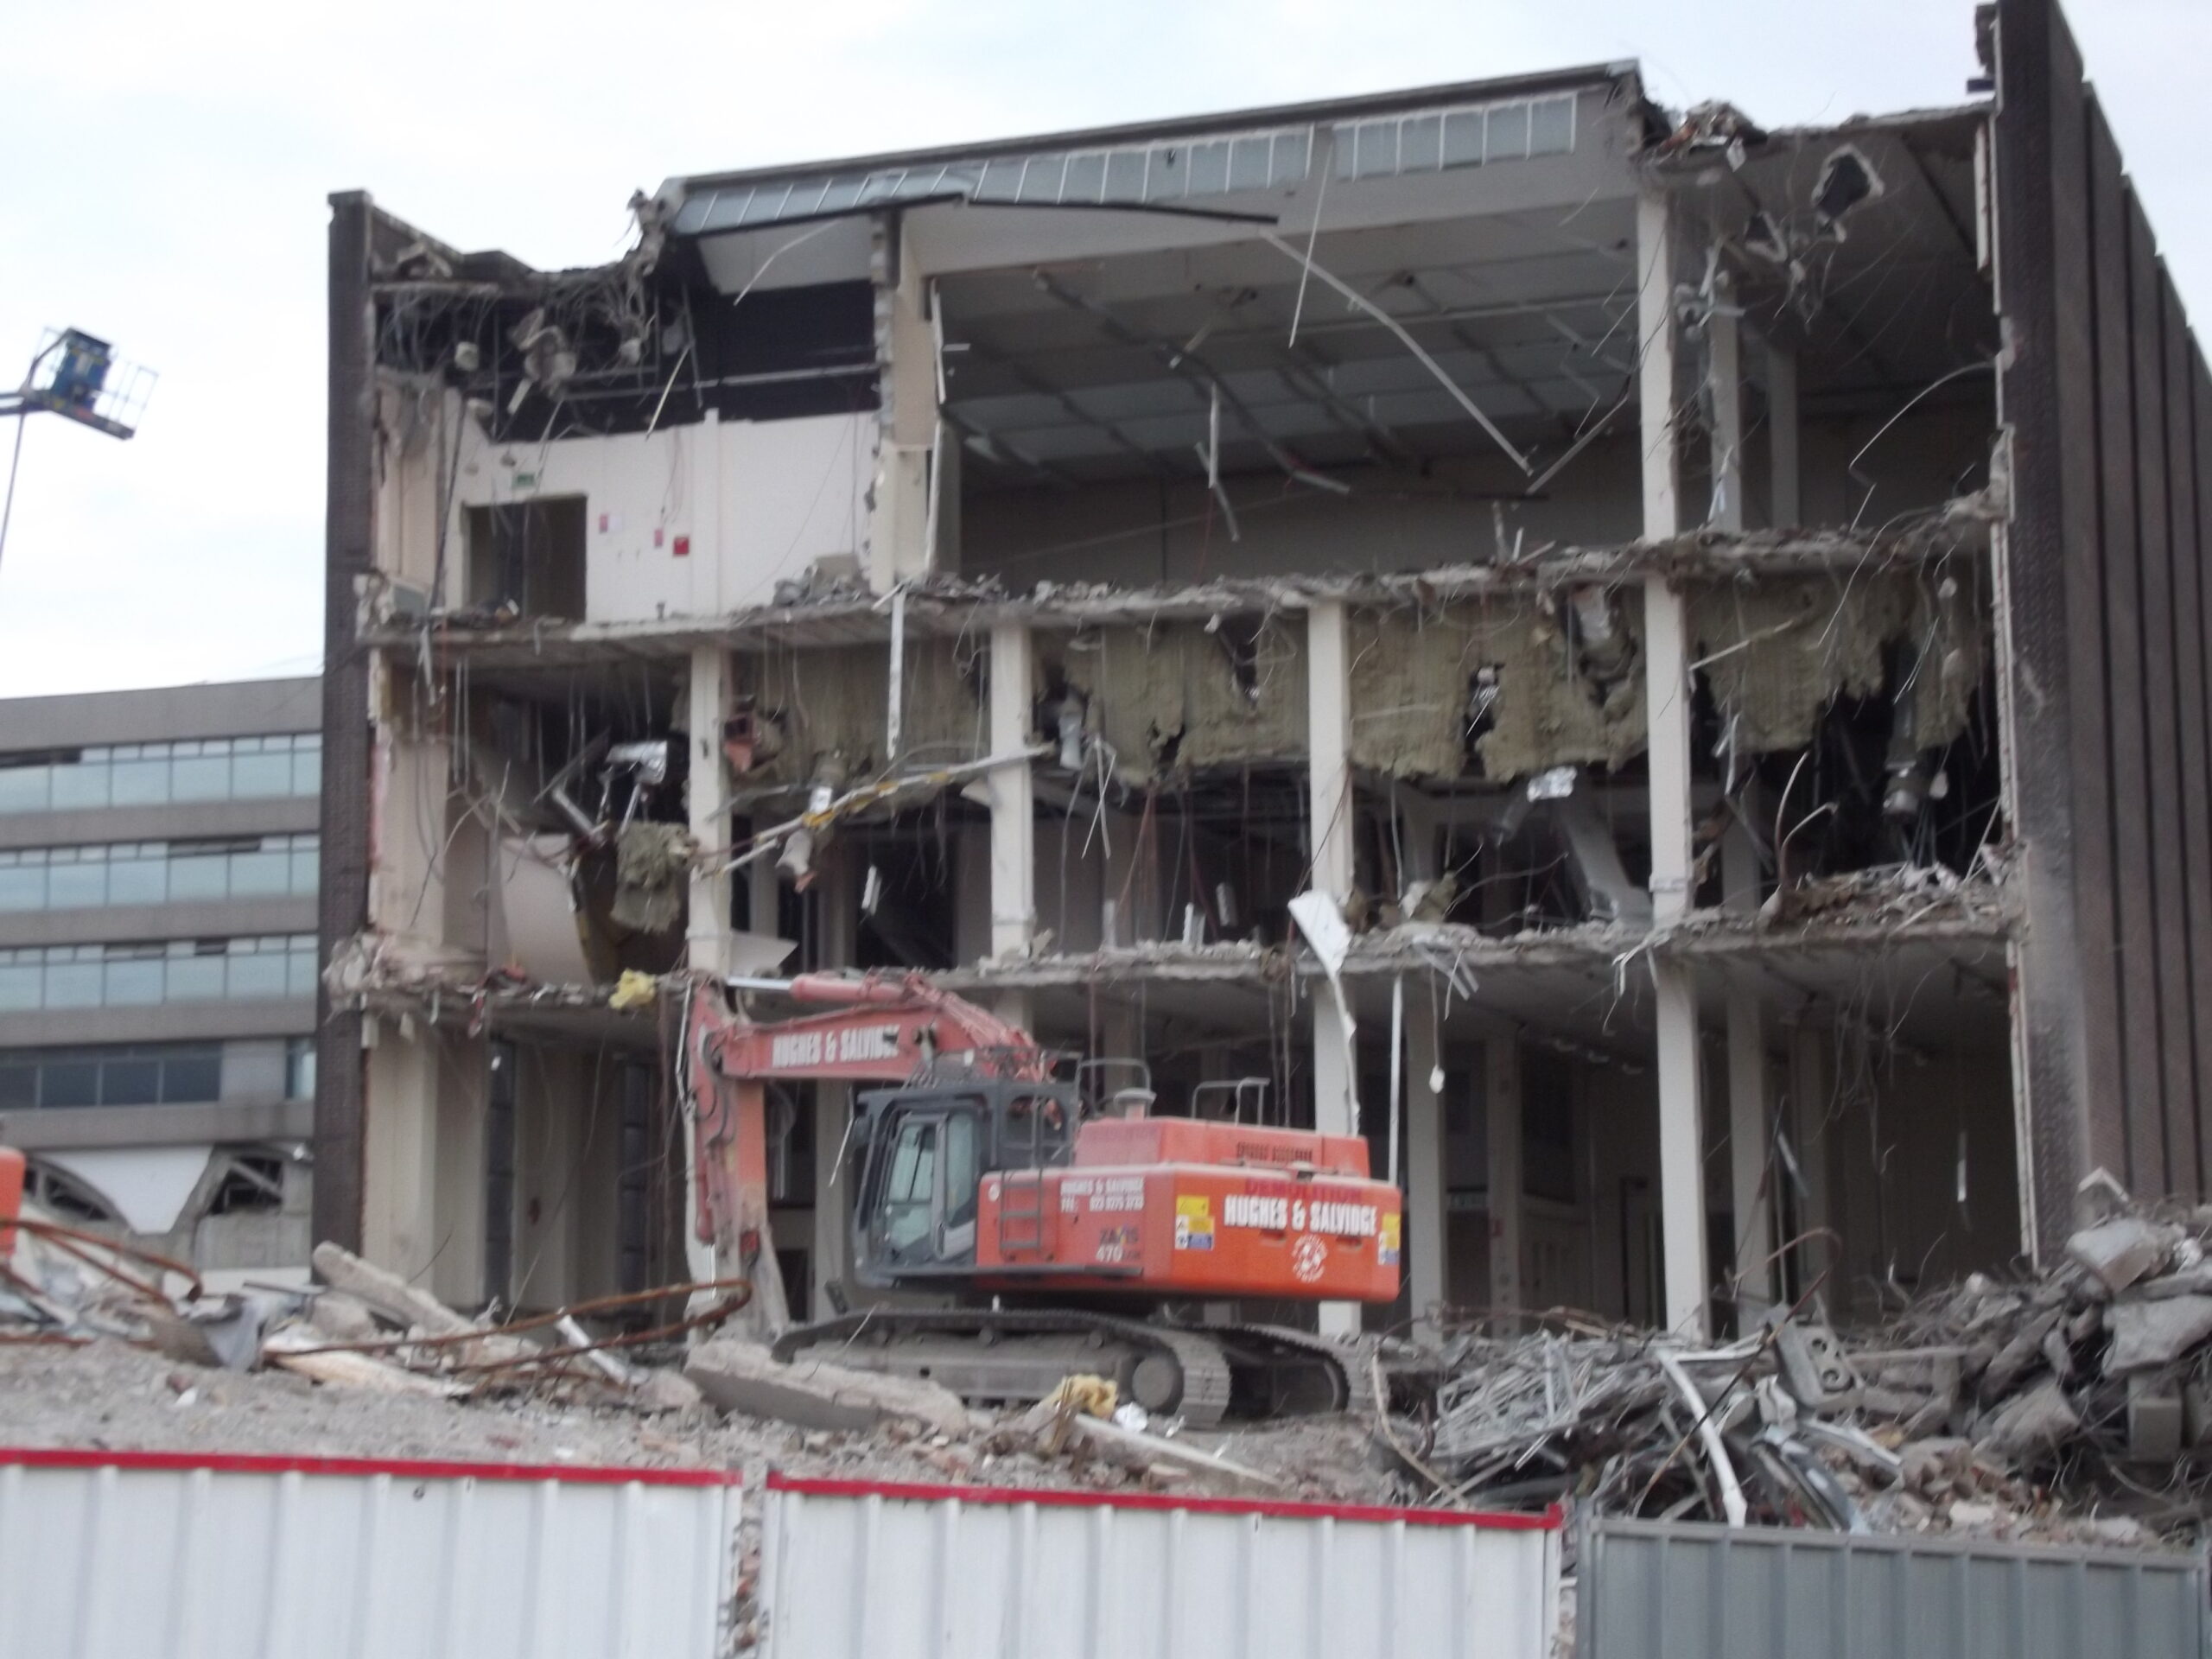 West Block demolition, 16 Apr 2012